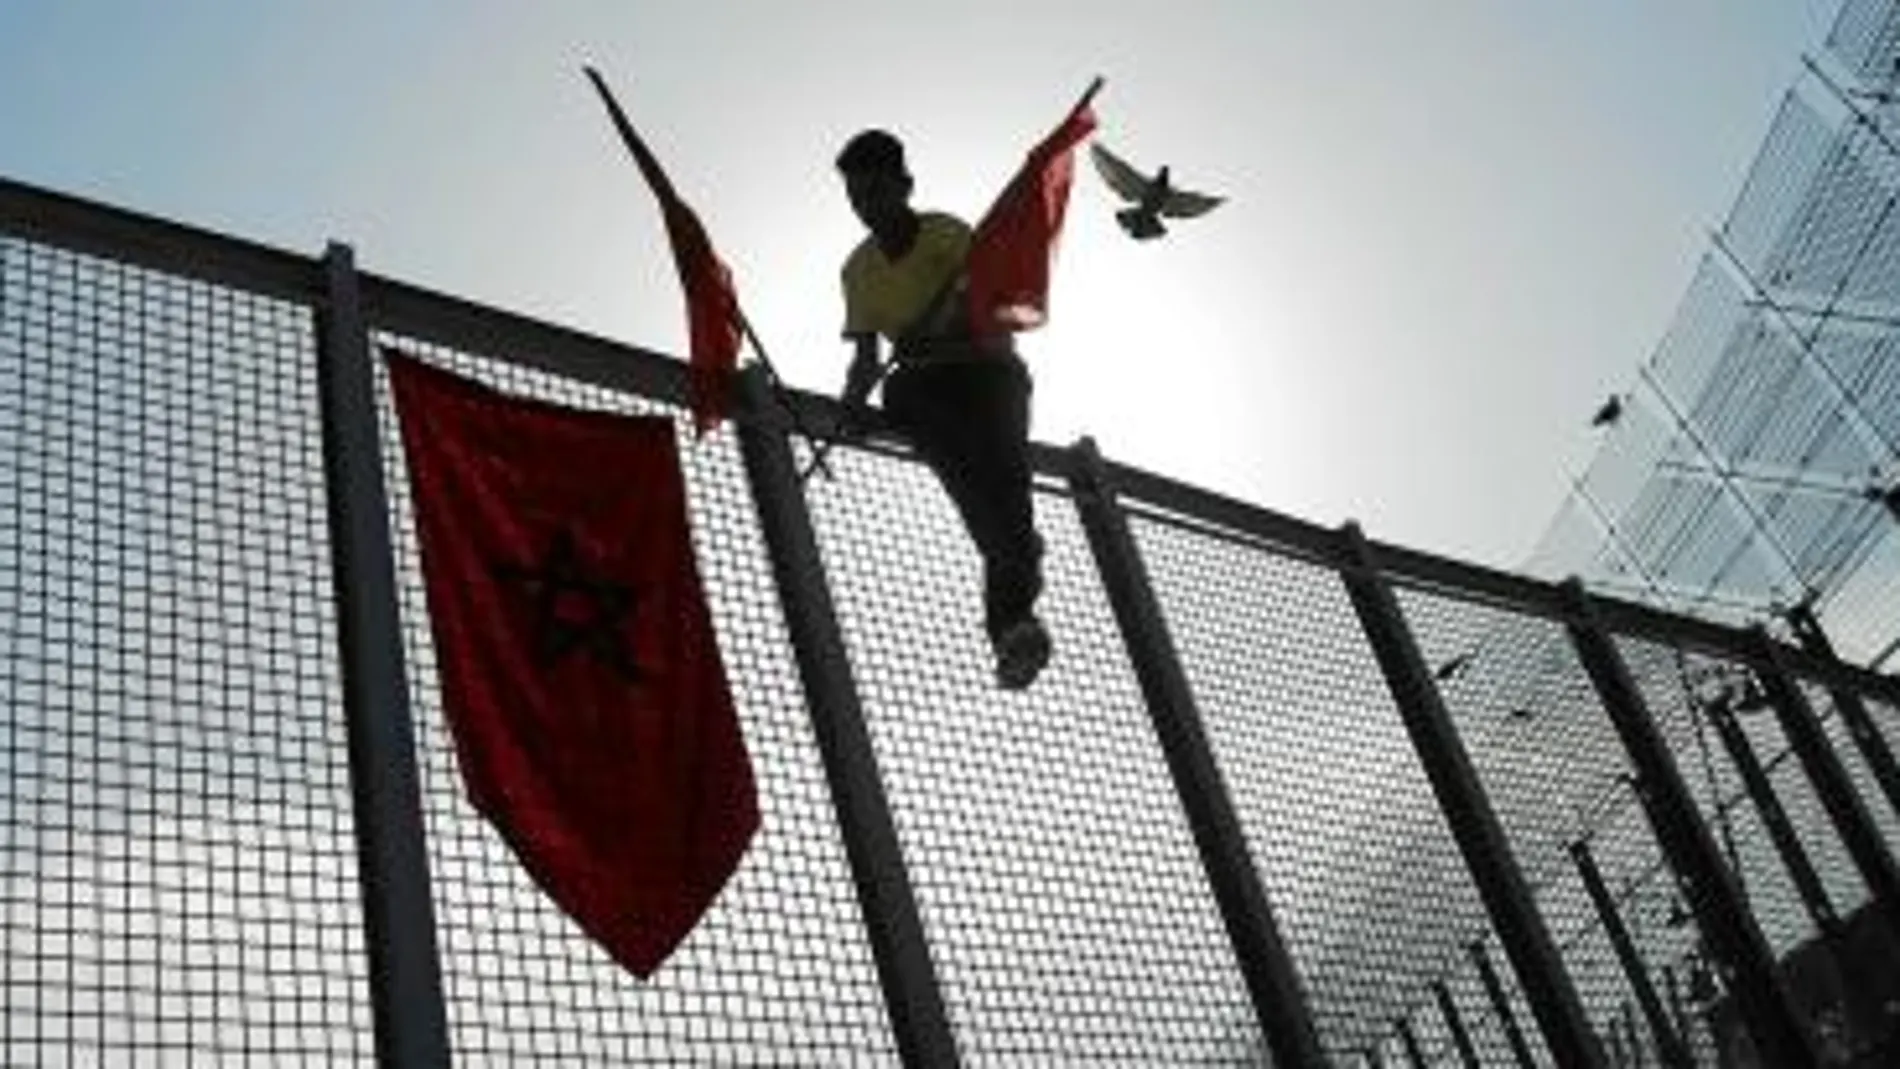 Fin de la tregua en la frontera de Melilla